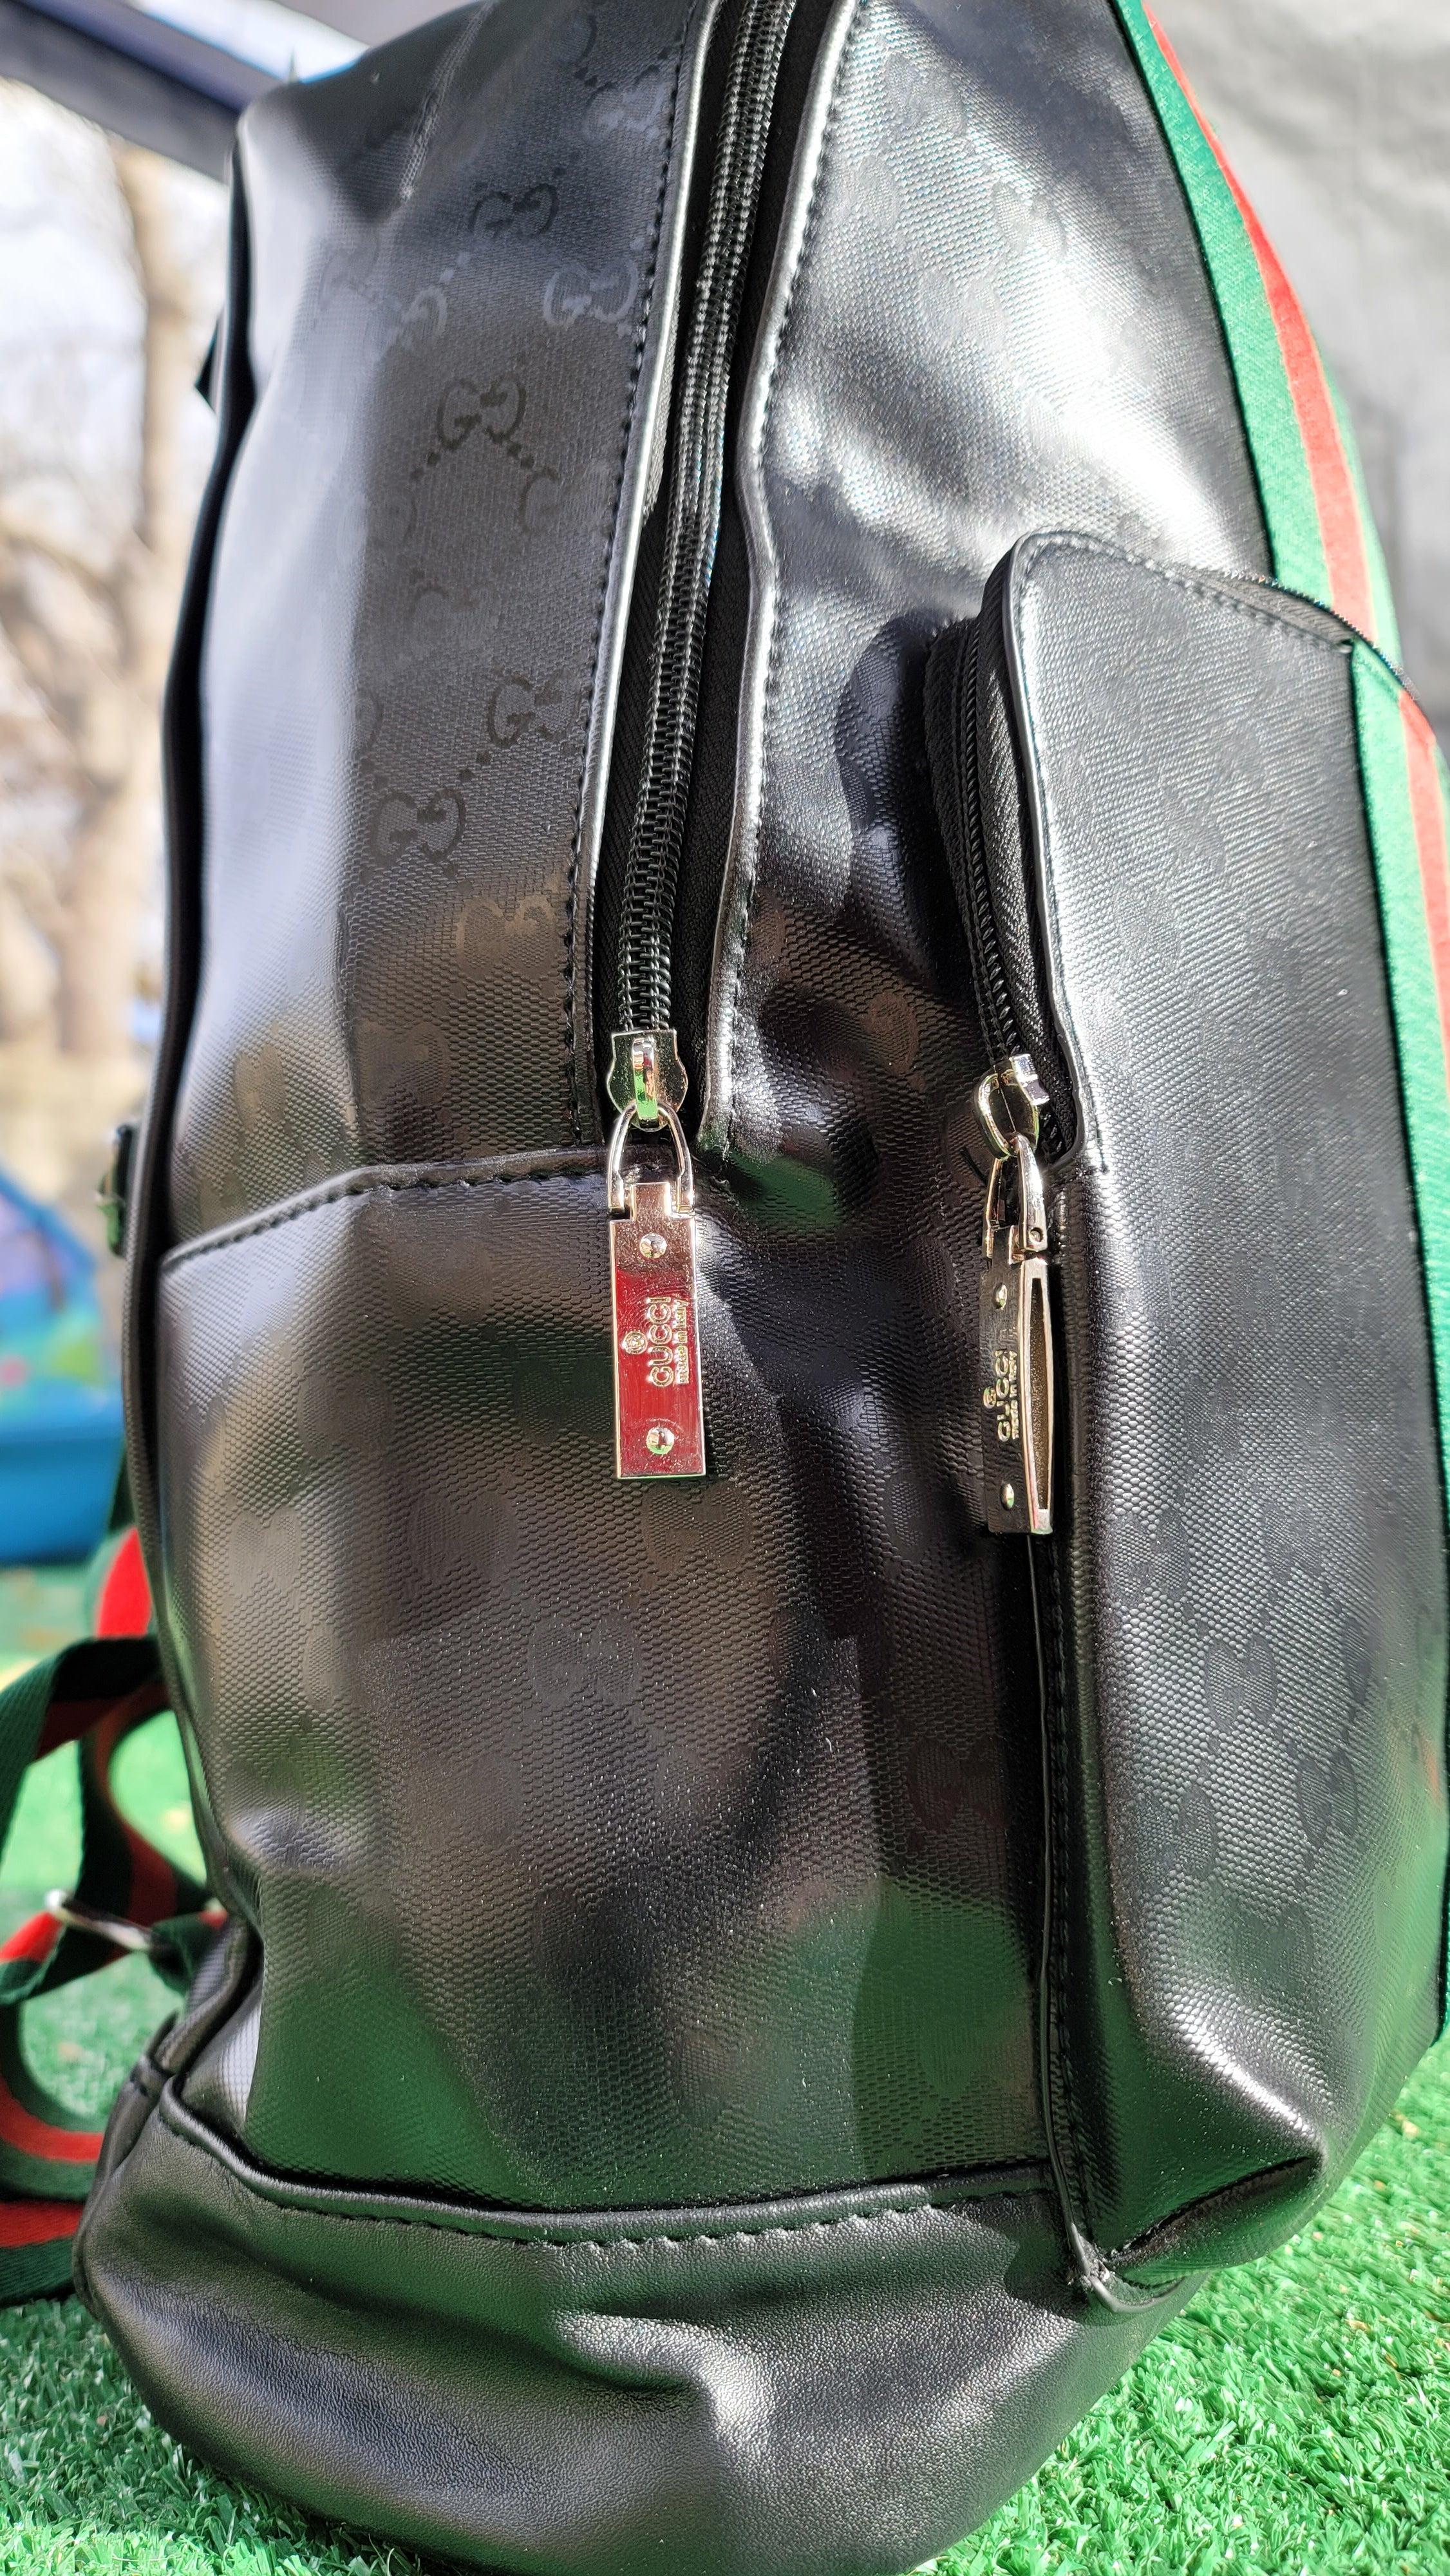 Backpacks Gucci - Soho dollar calf backpack - 431570CAO0G5594